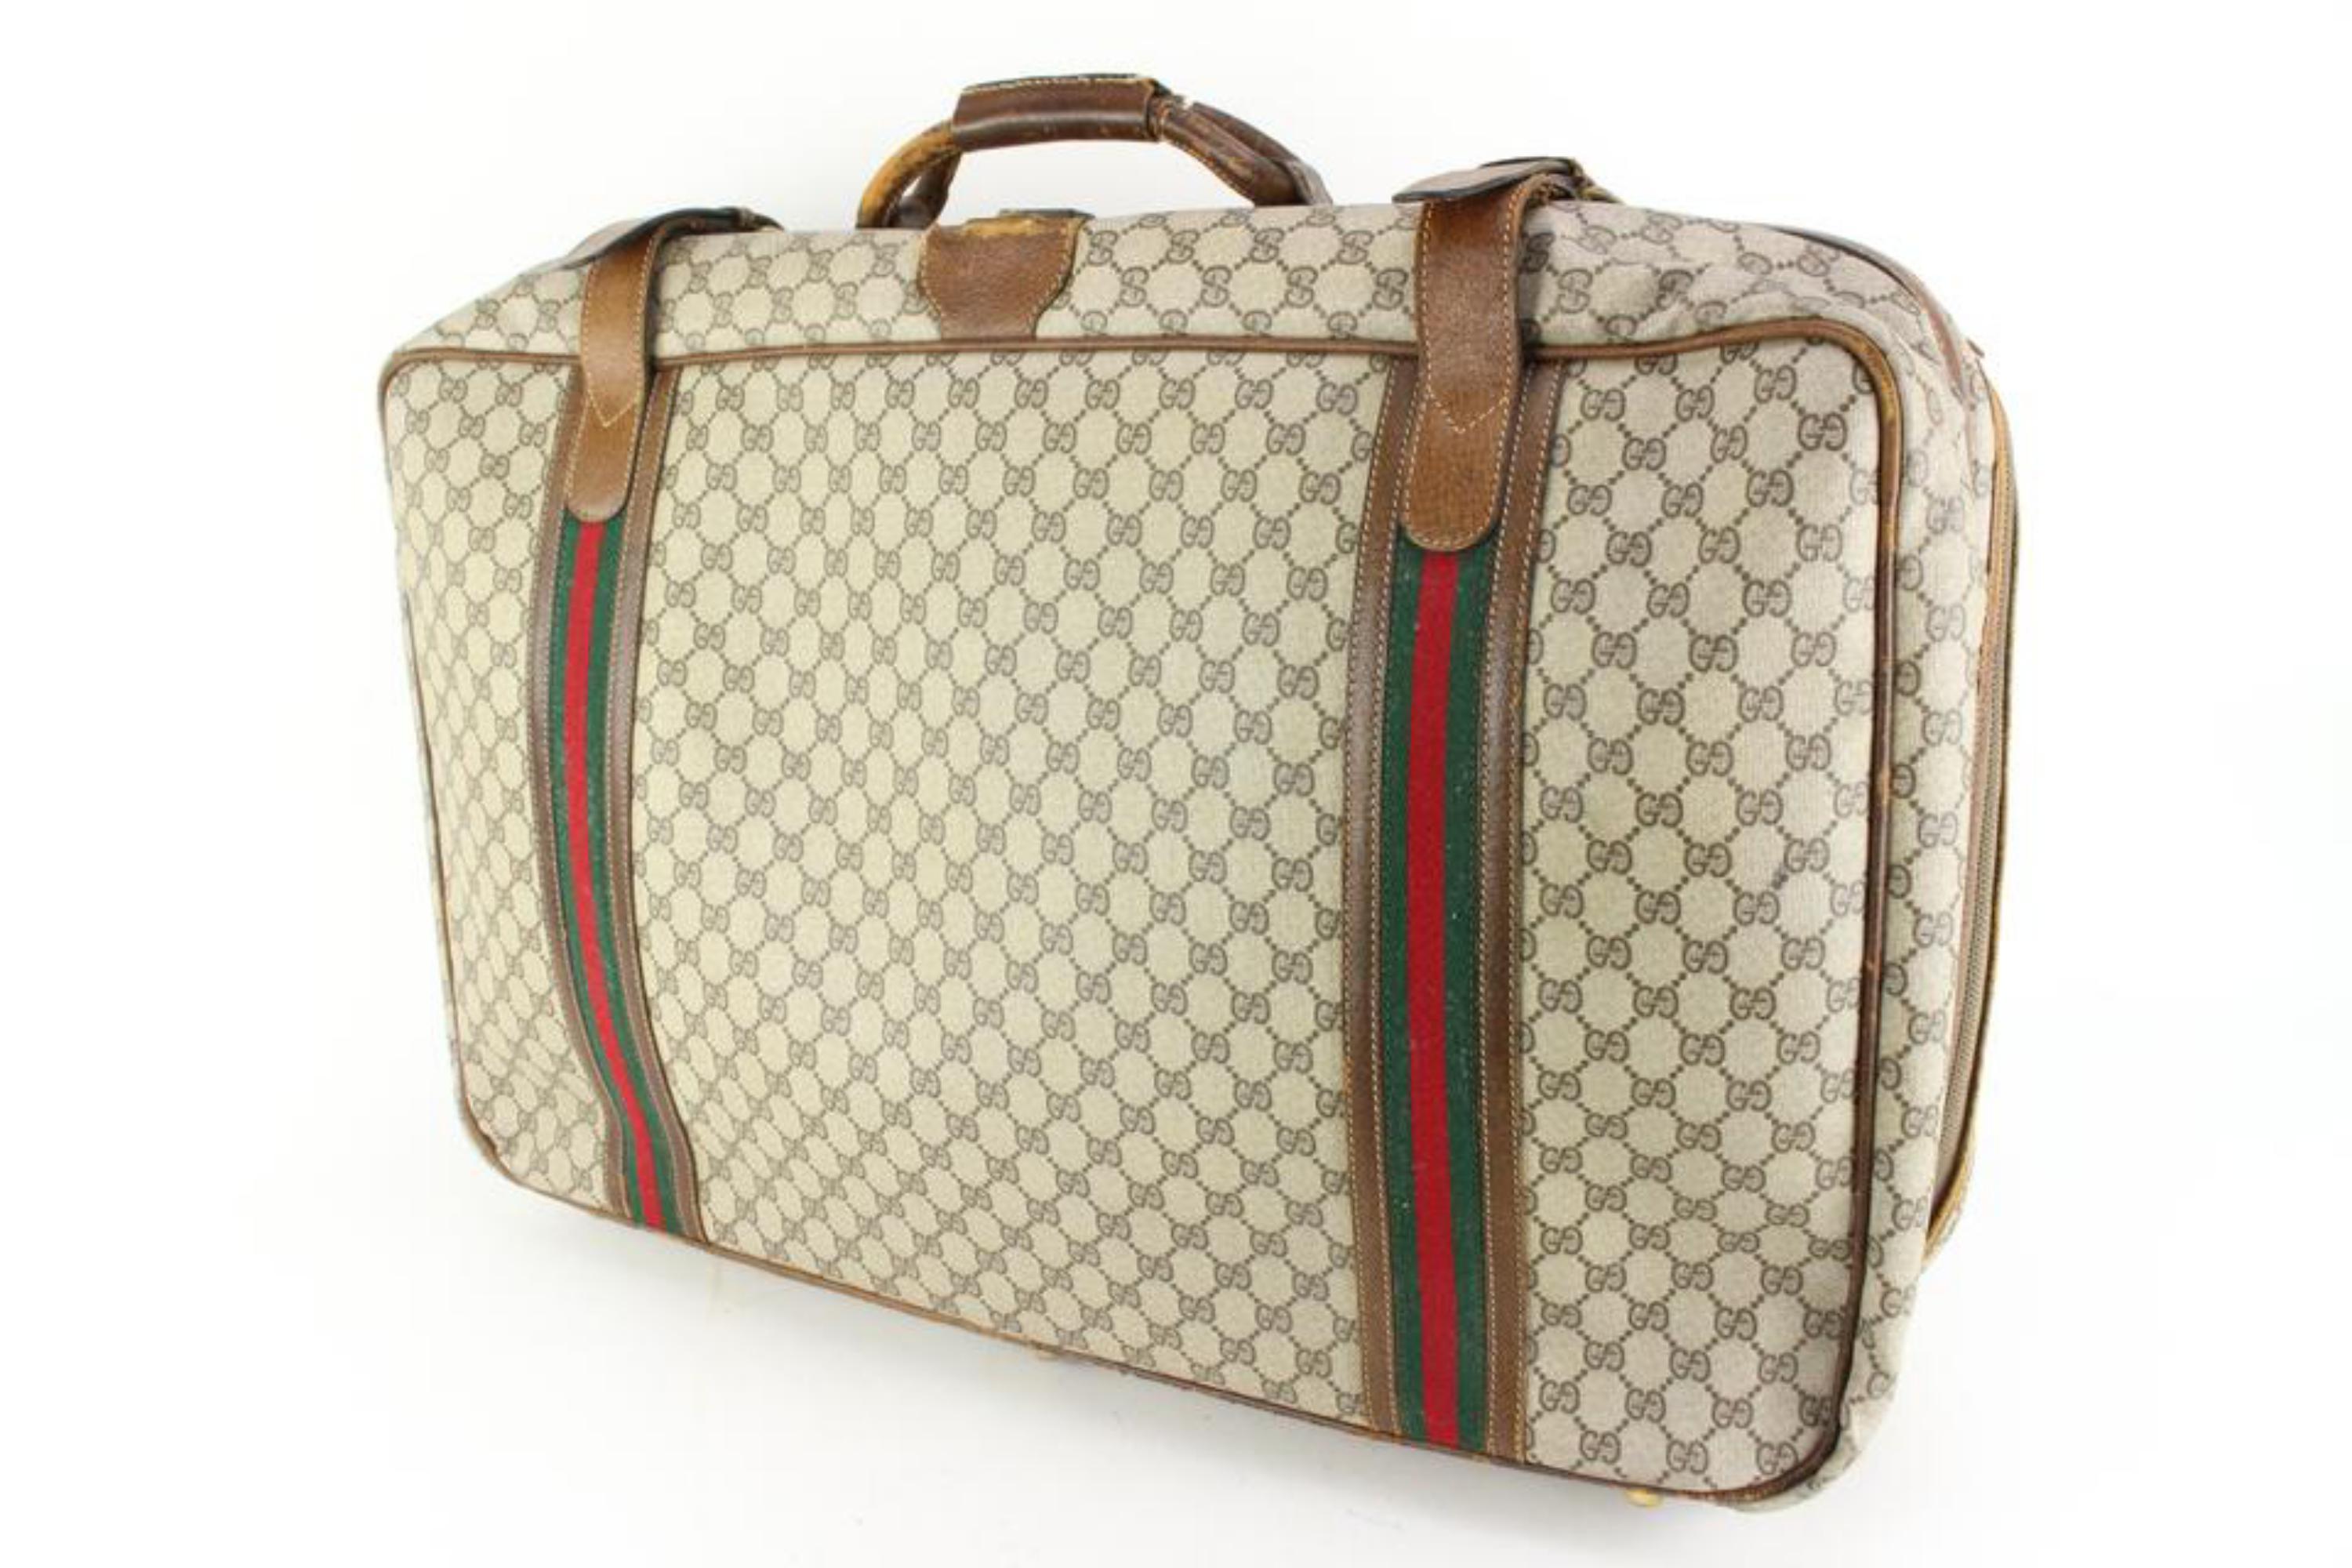 Gucci XL Supreme GG Monogram Web Suitcase Luggage Soft Trunk 62gz429s For Sale 2